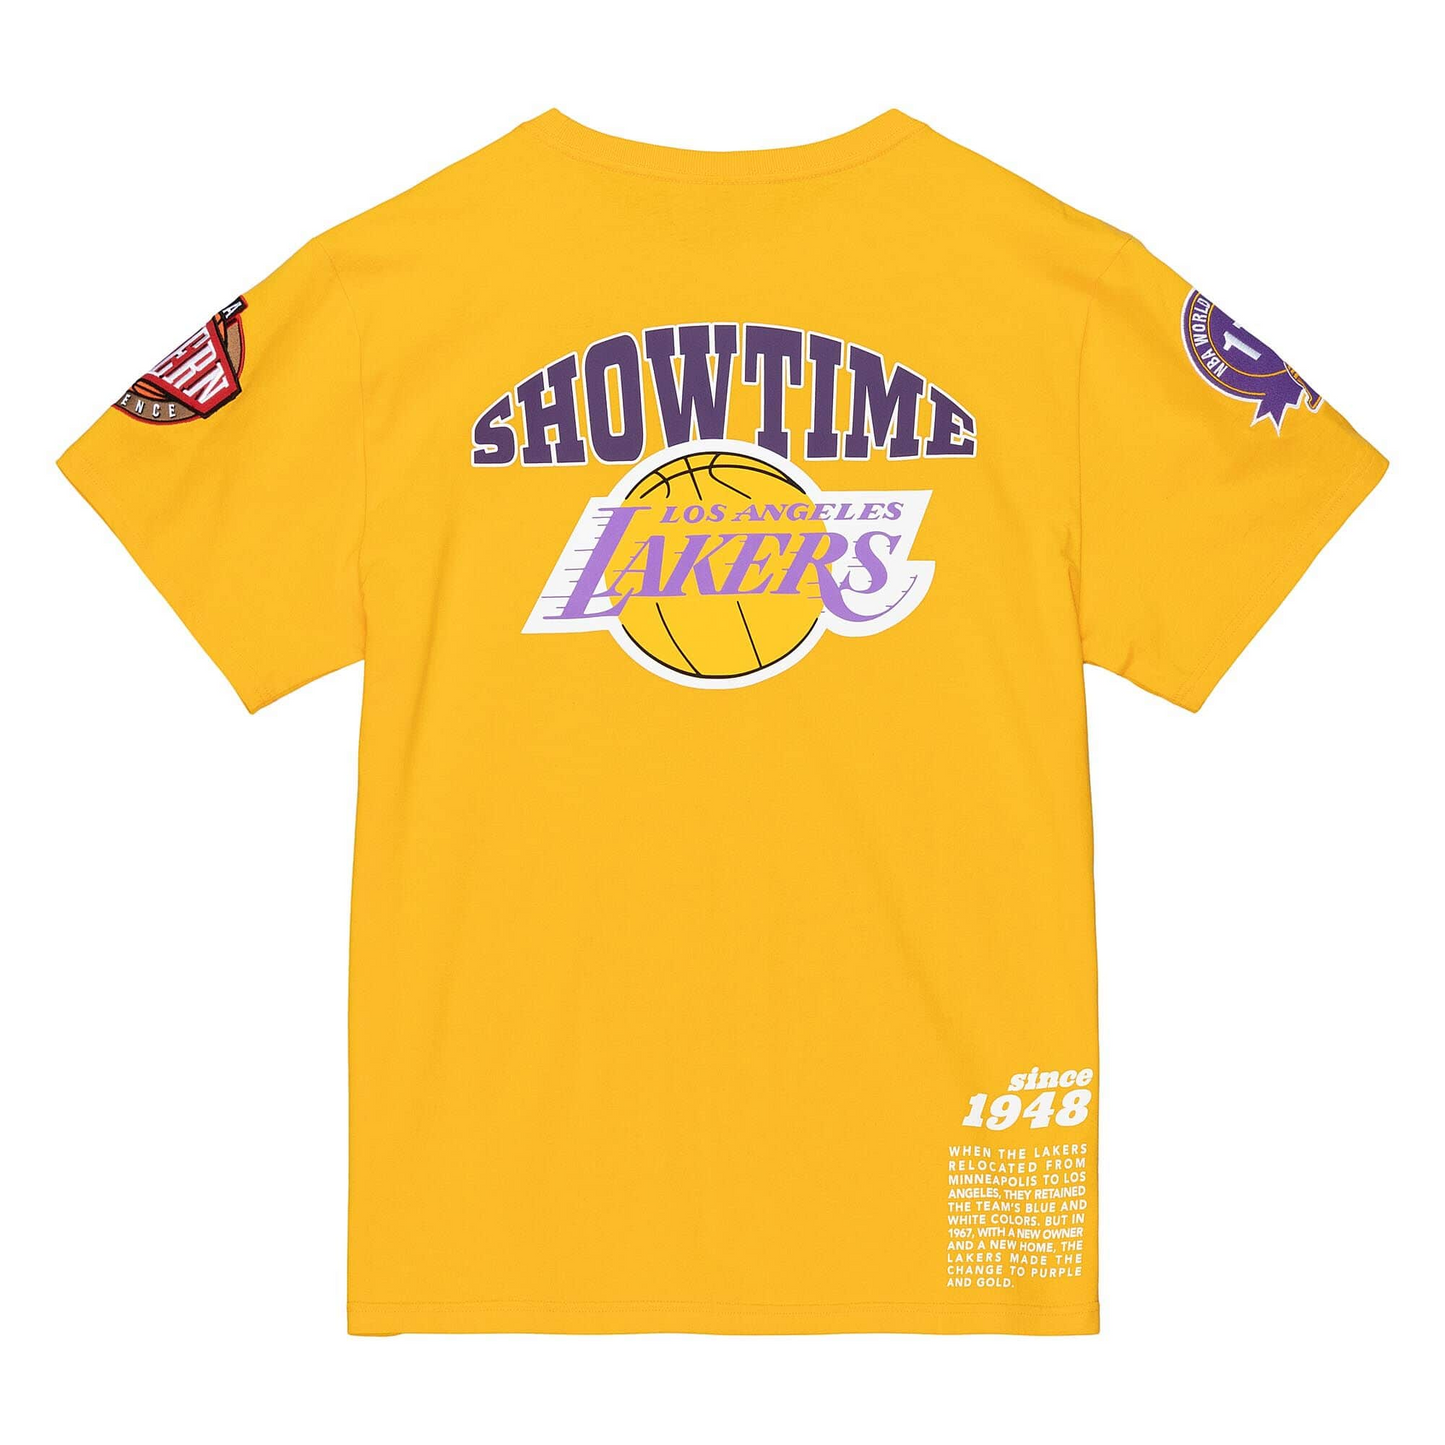 Los Angeles Lakers Equipo, Lakers camisetas, tienda, Lakers tienda